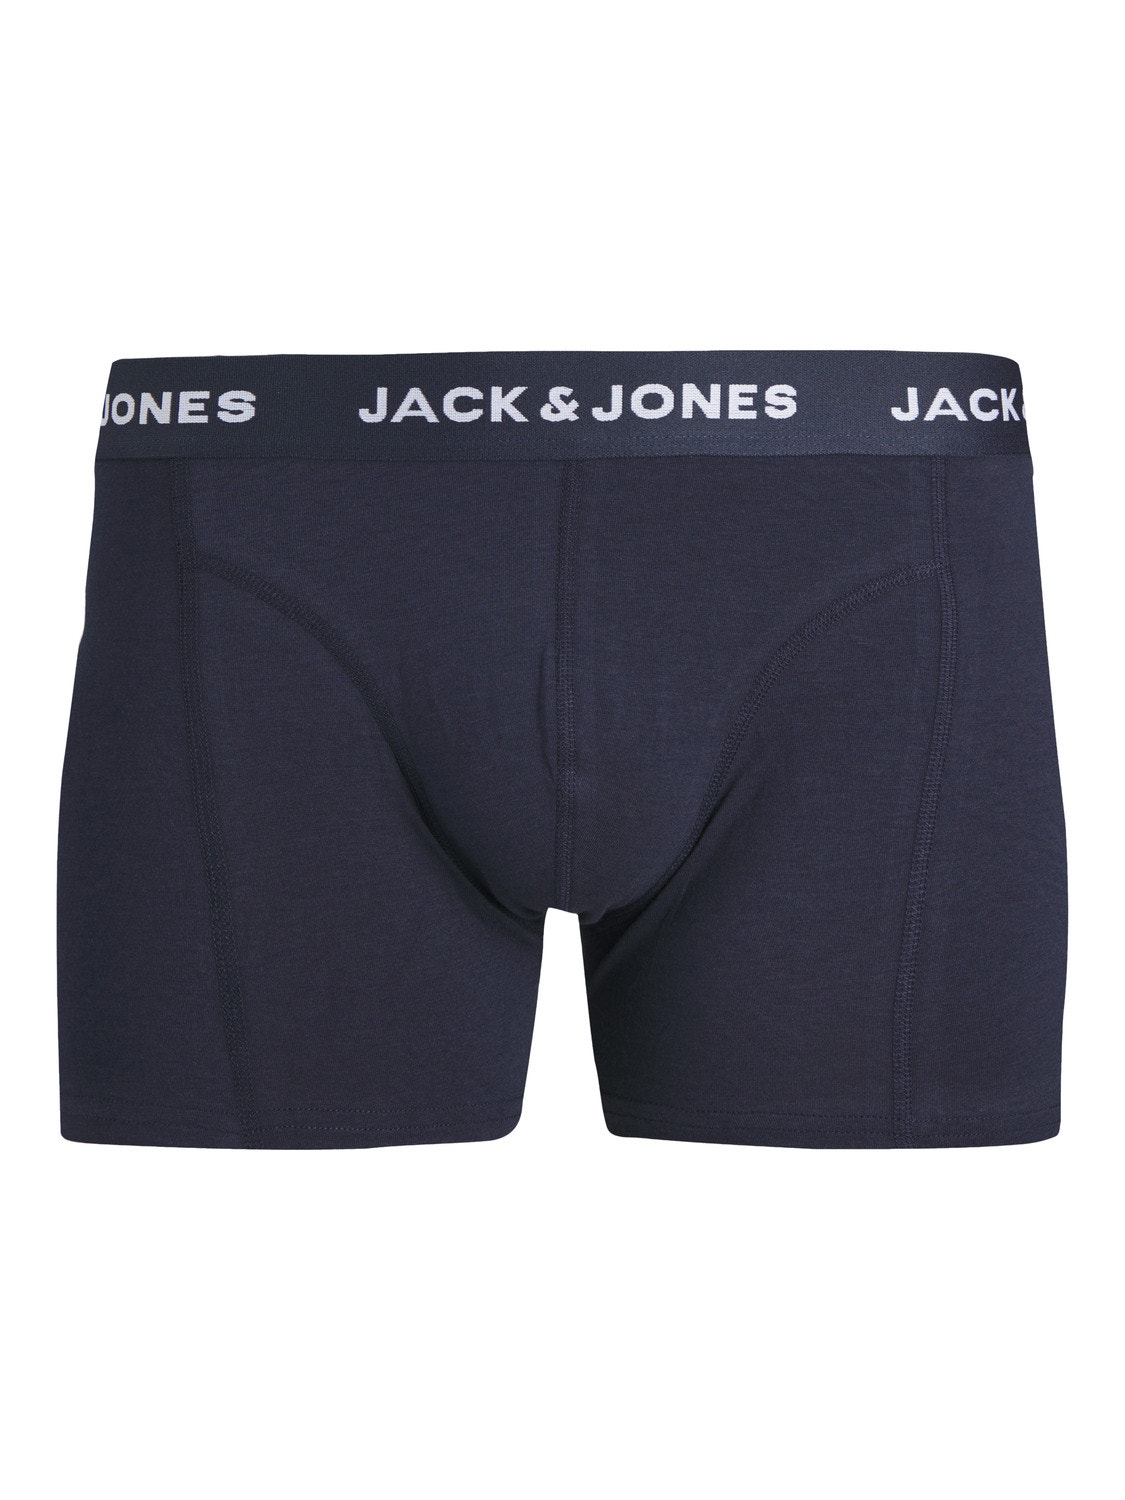 Jack & Jones 3er-pack Boxershorts -Navy Blazer - 12251471